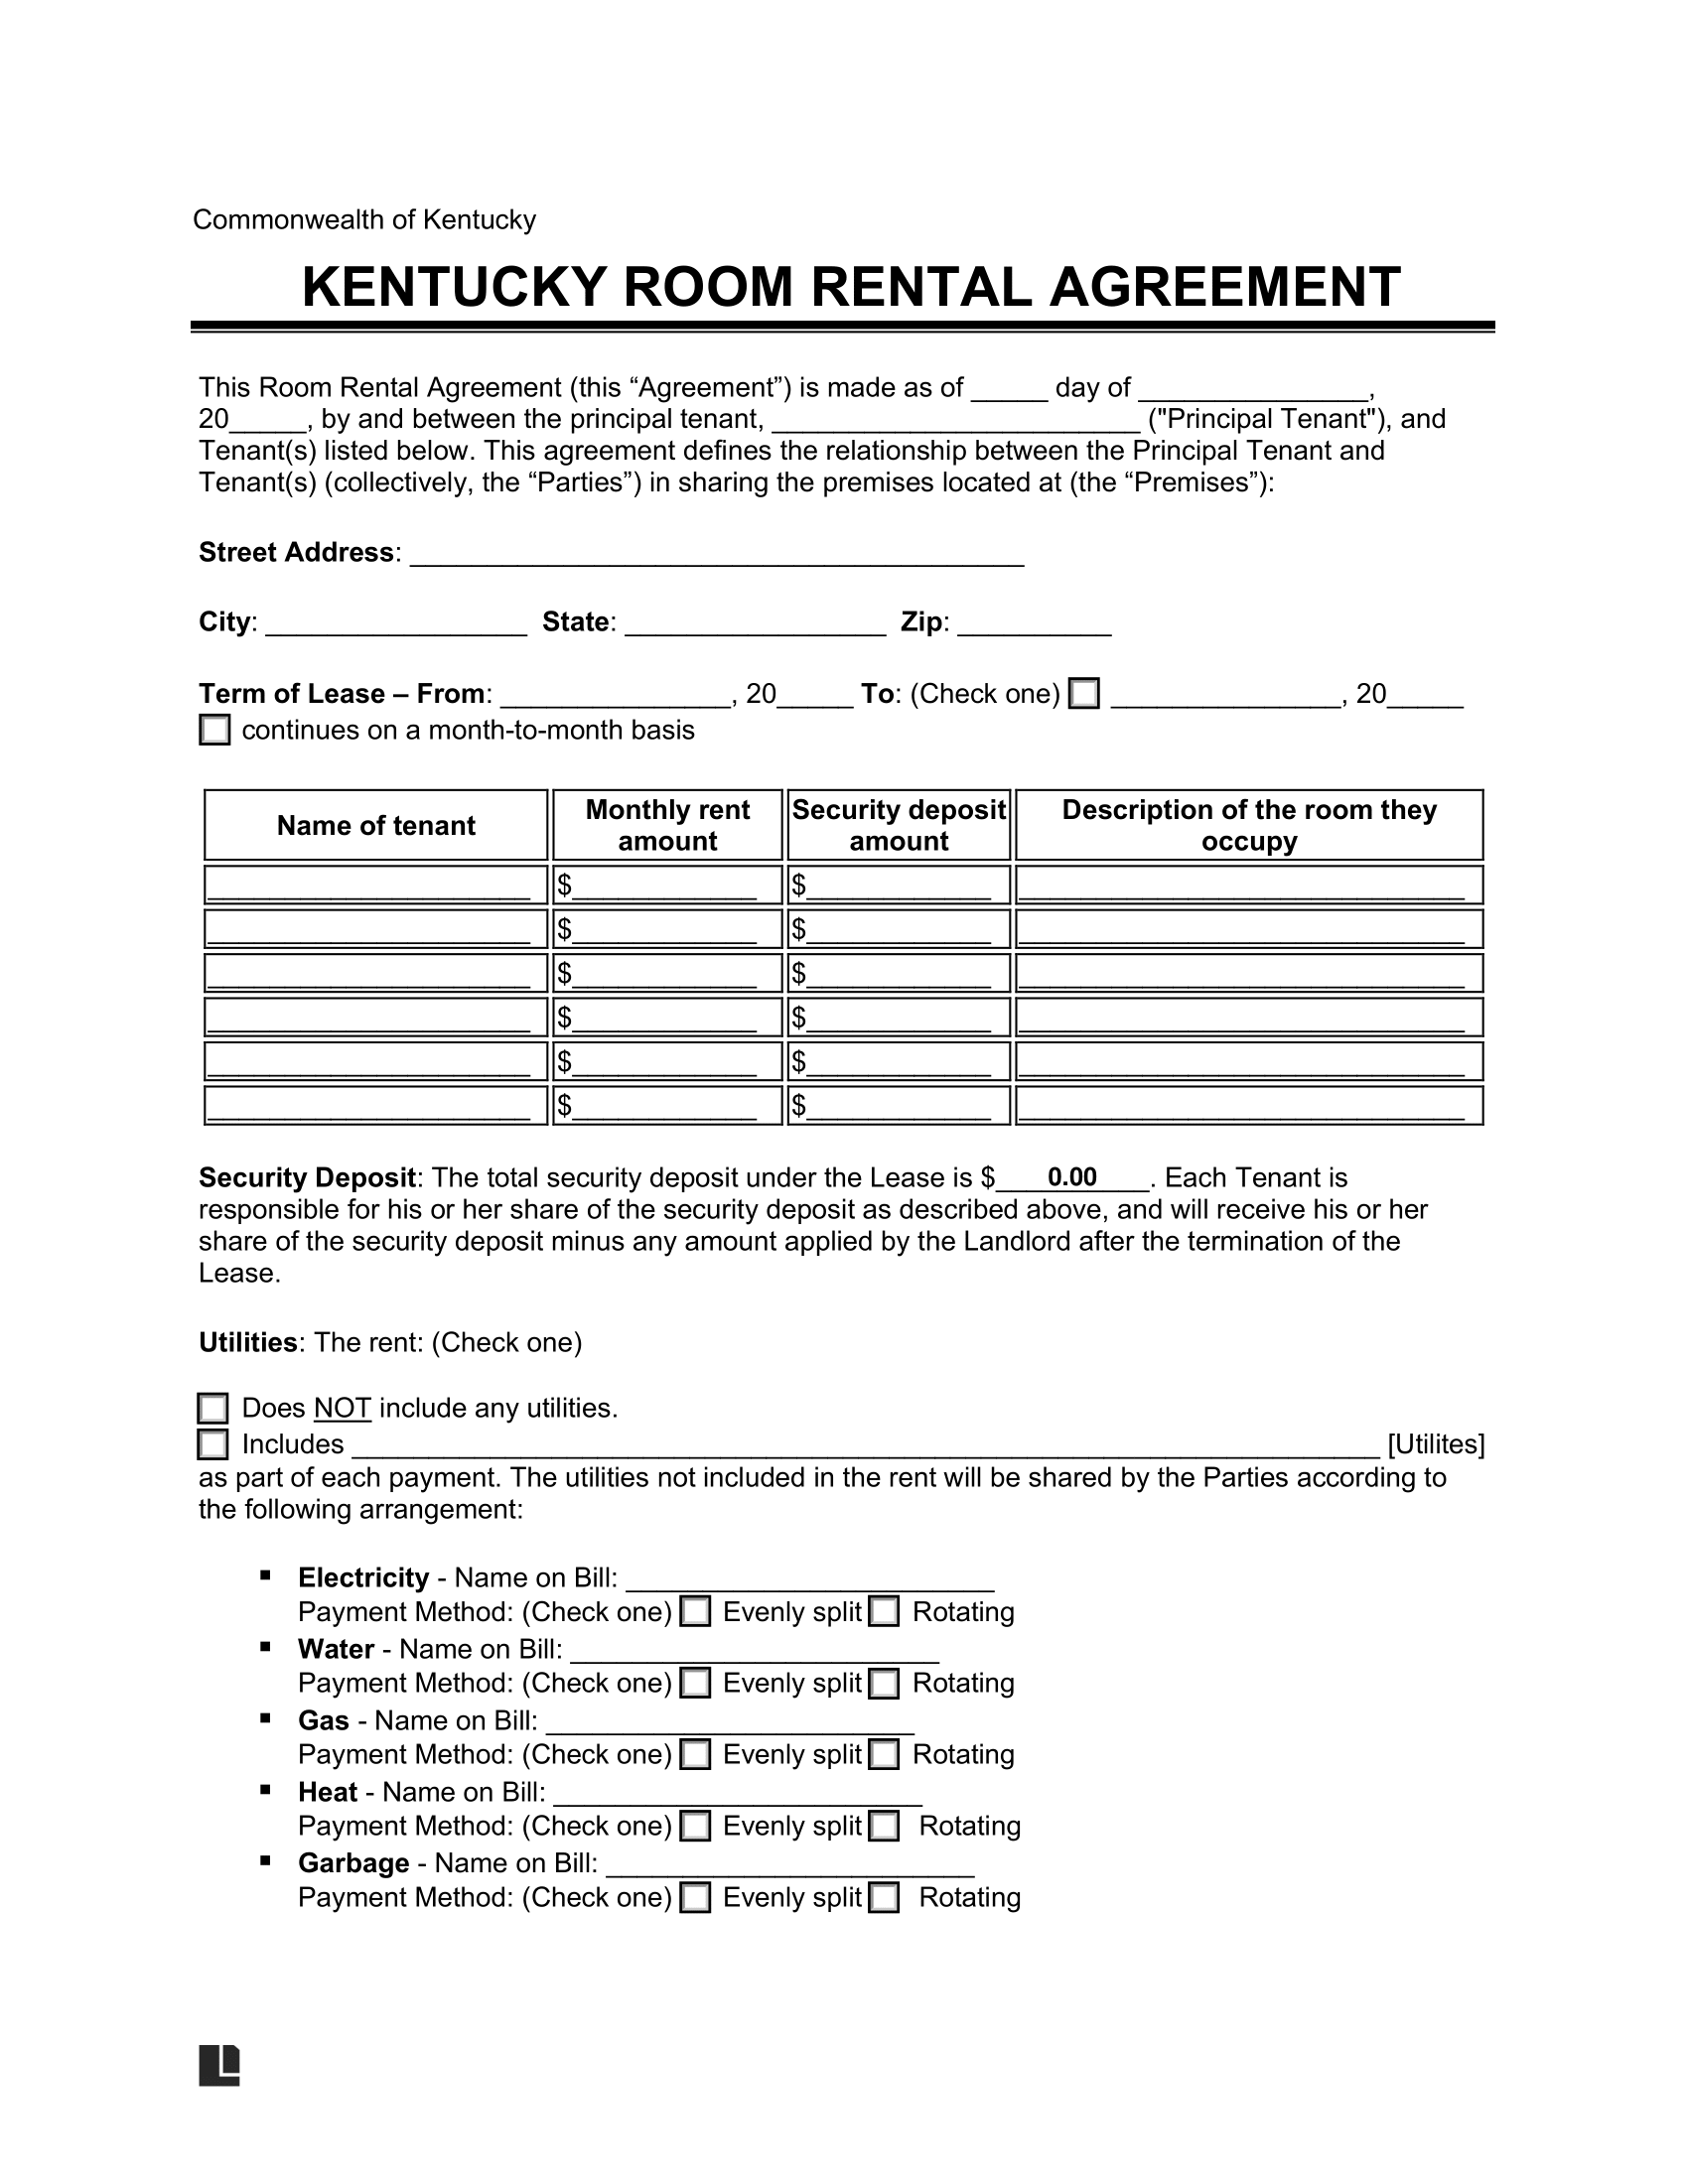 Kentucky Room Rental Agreement